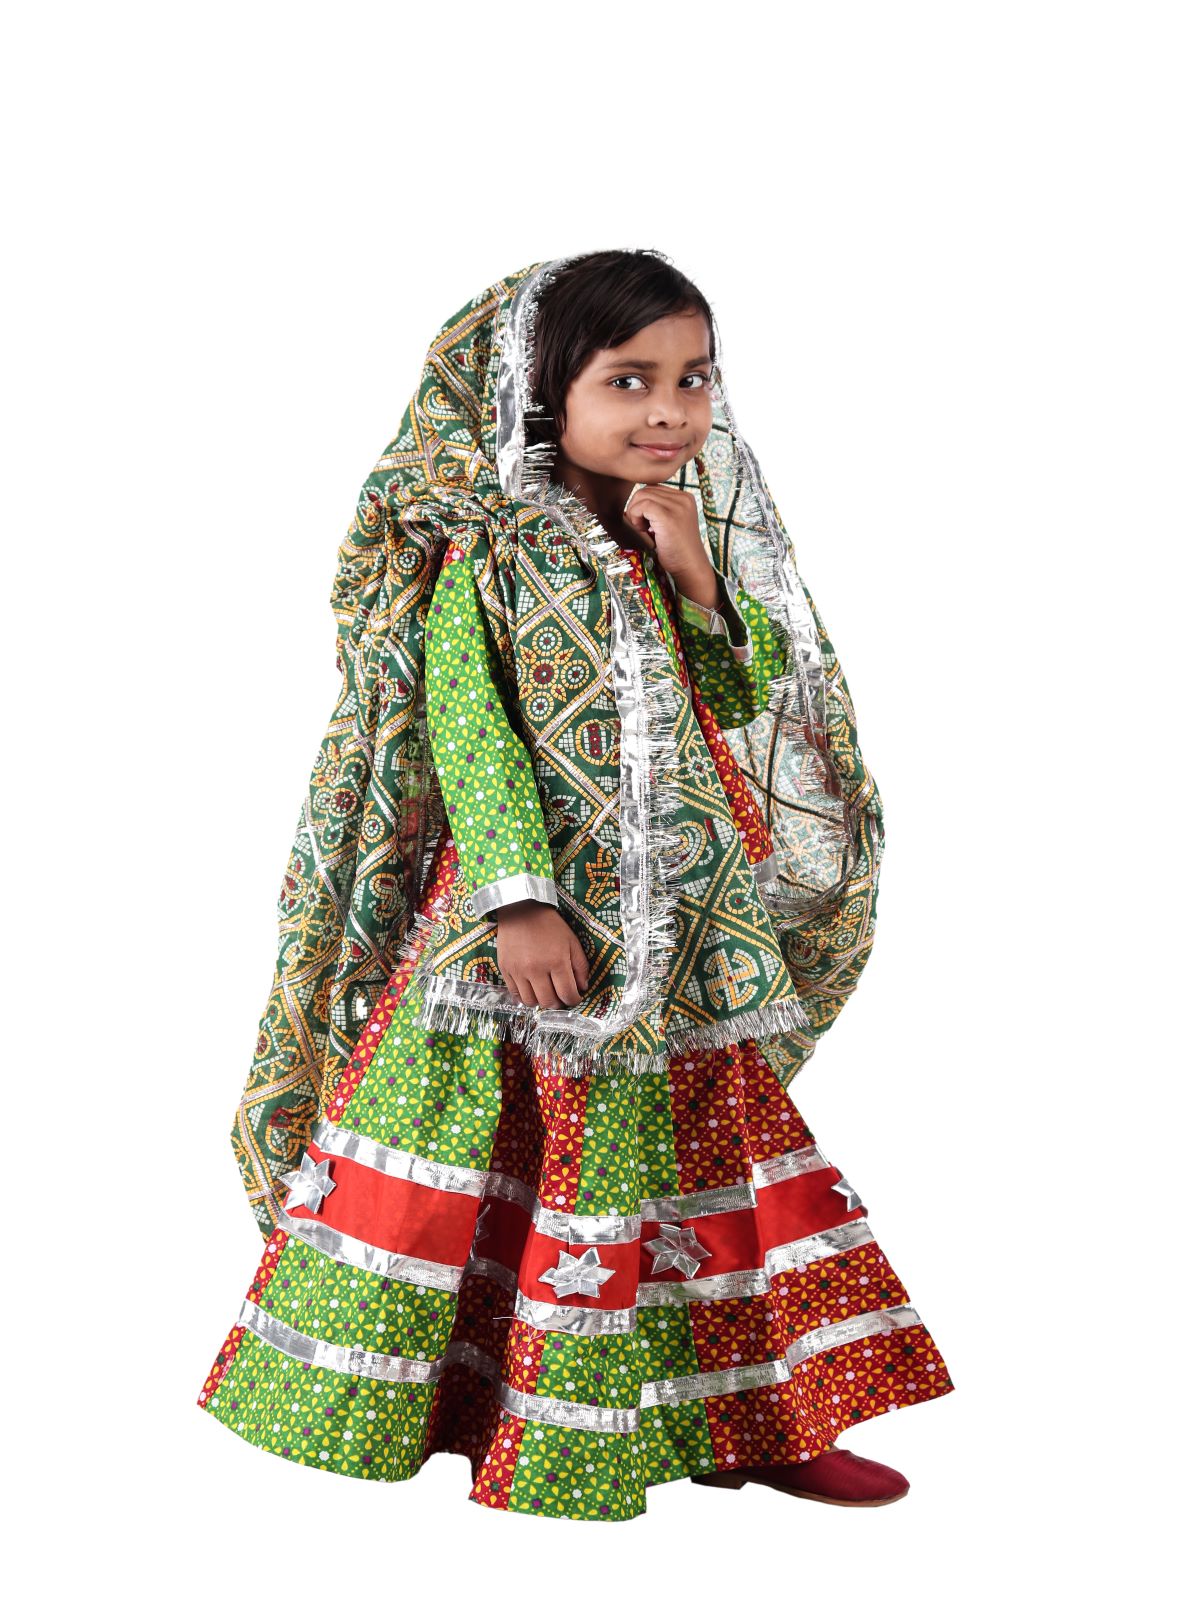 Rajasthani Costume for Girl - Buy Now | Kids Fancy Dress